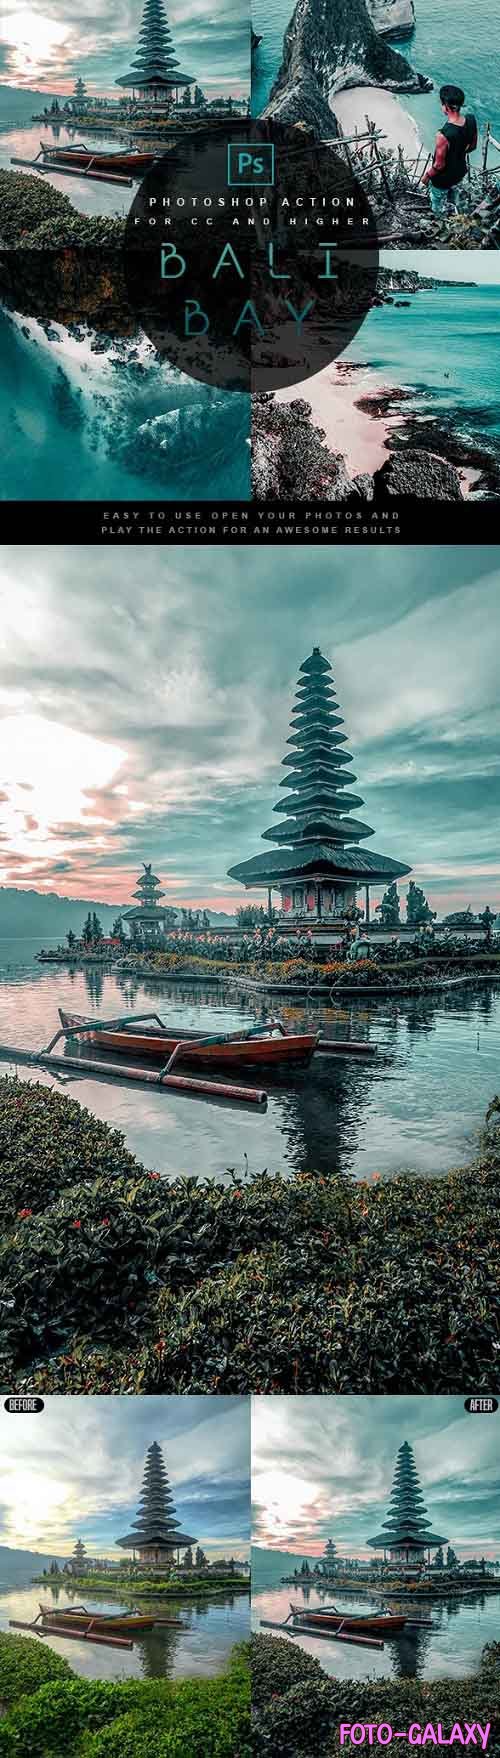 GraphicRiver - Bali Bay - Photoshop Action 28295208